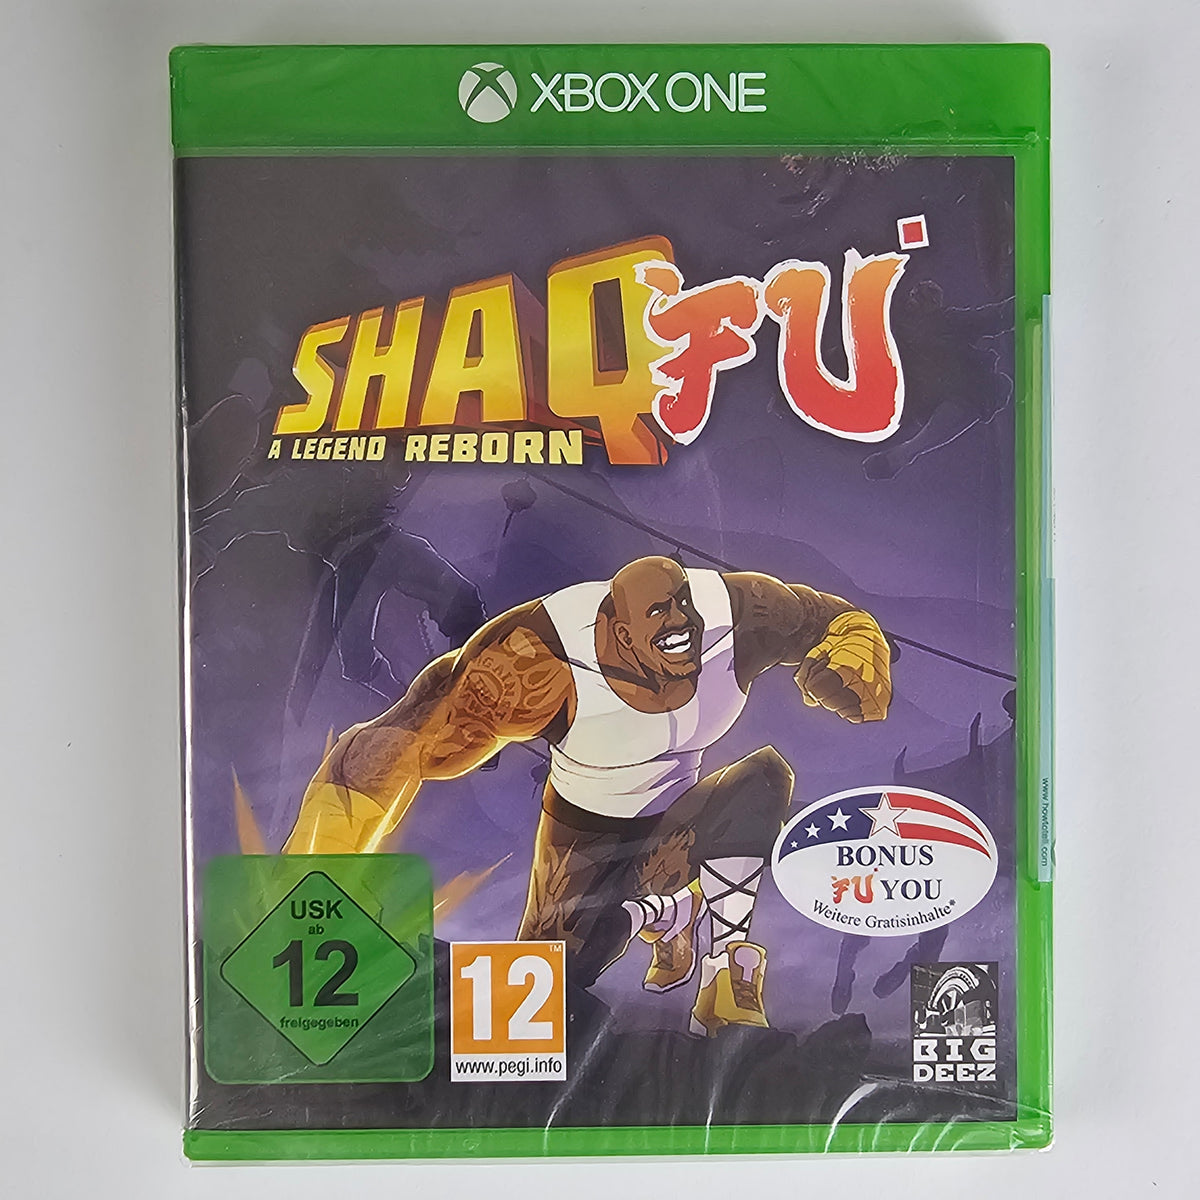 Shaq Fu: A Legend Reborn [XBOXO]